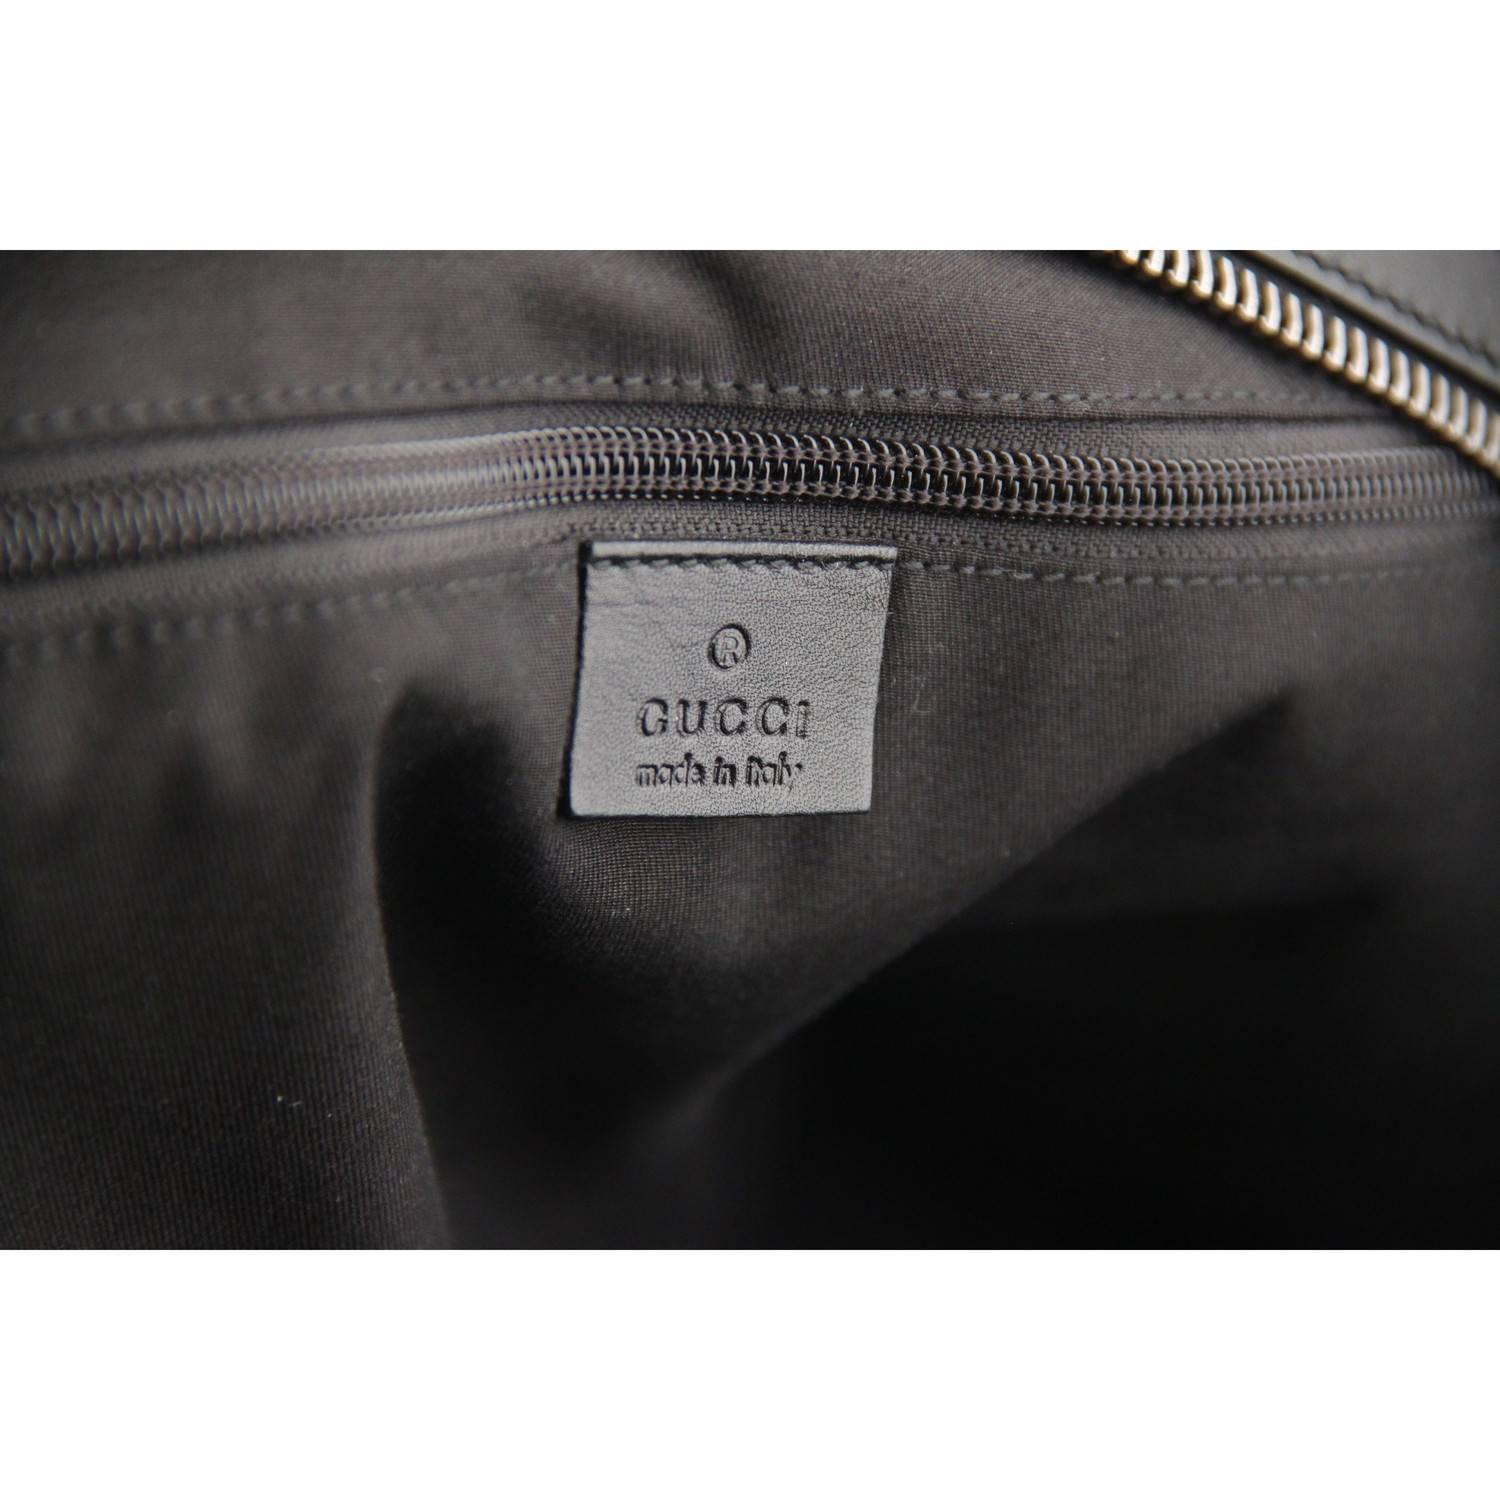 Gucci Black Canvas Soft Briefcase Travel Bag Overnight Bag 5